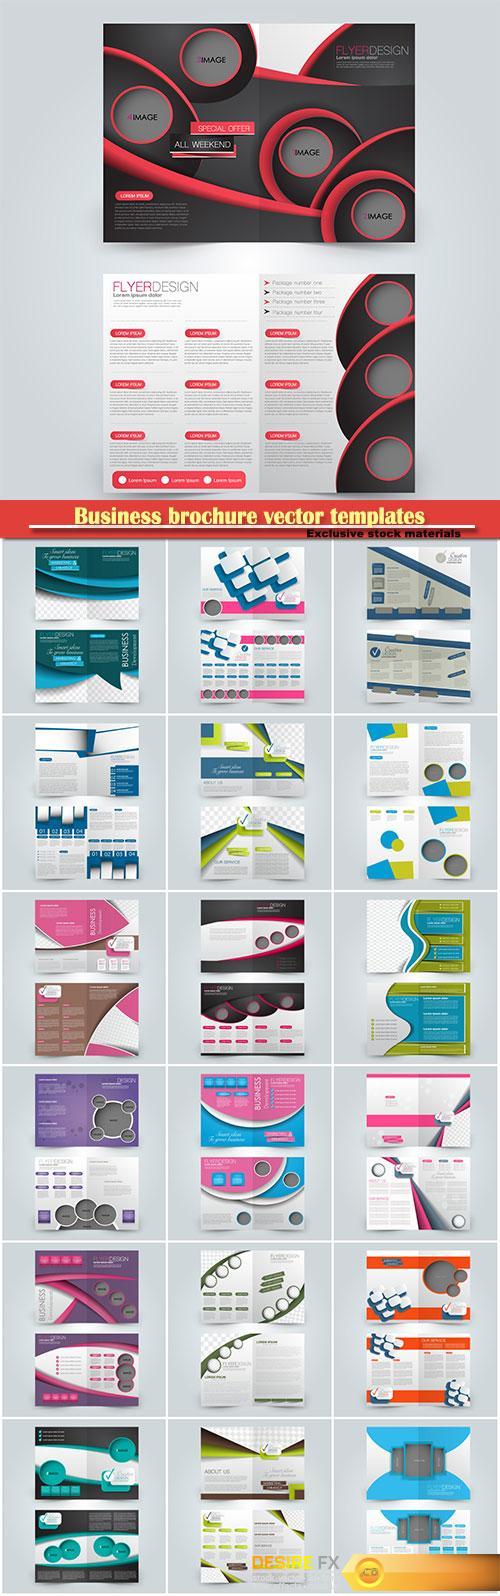 Business brochure vector templates, magazine cover, business mockup, education, presentation, report # 54